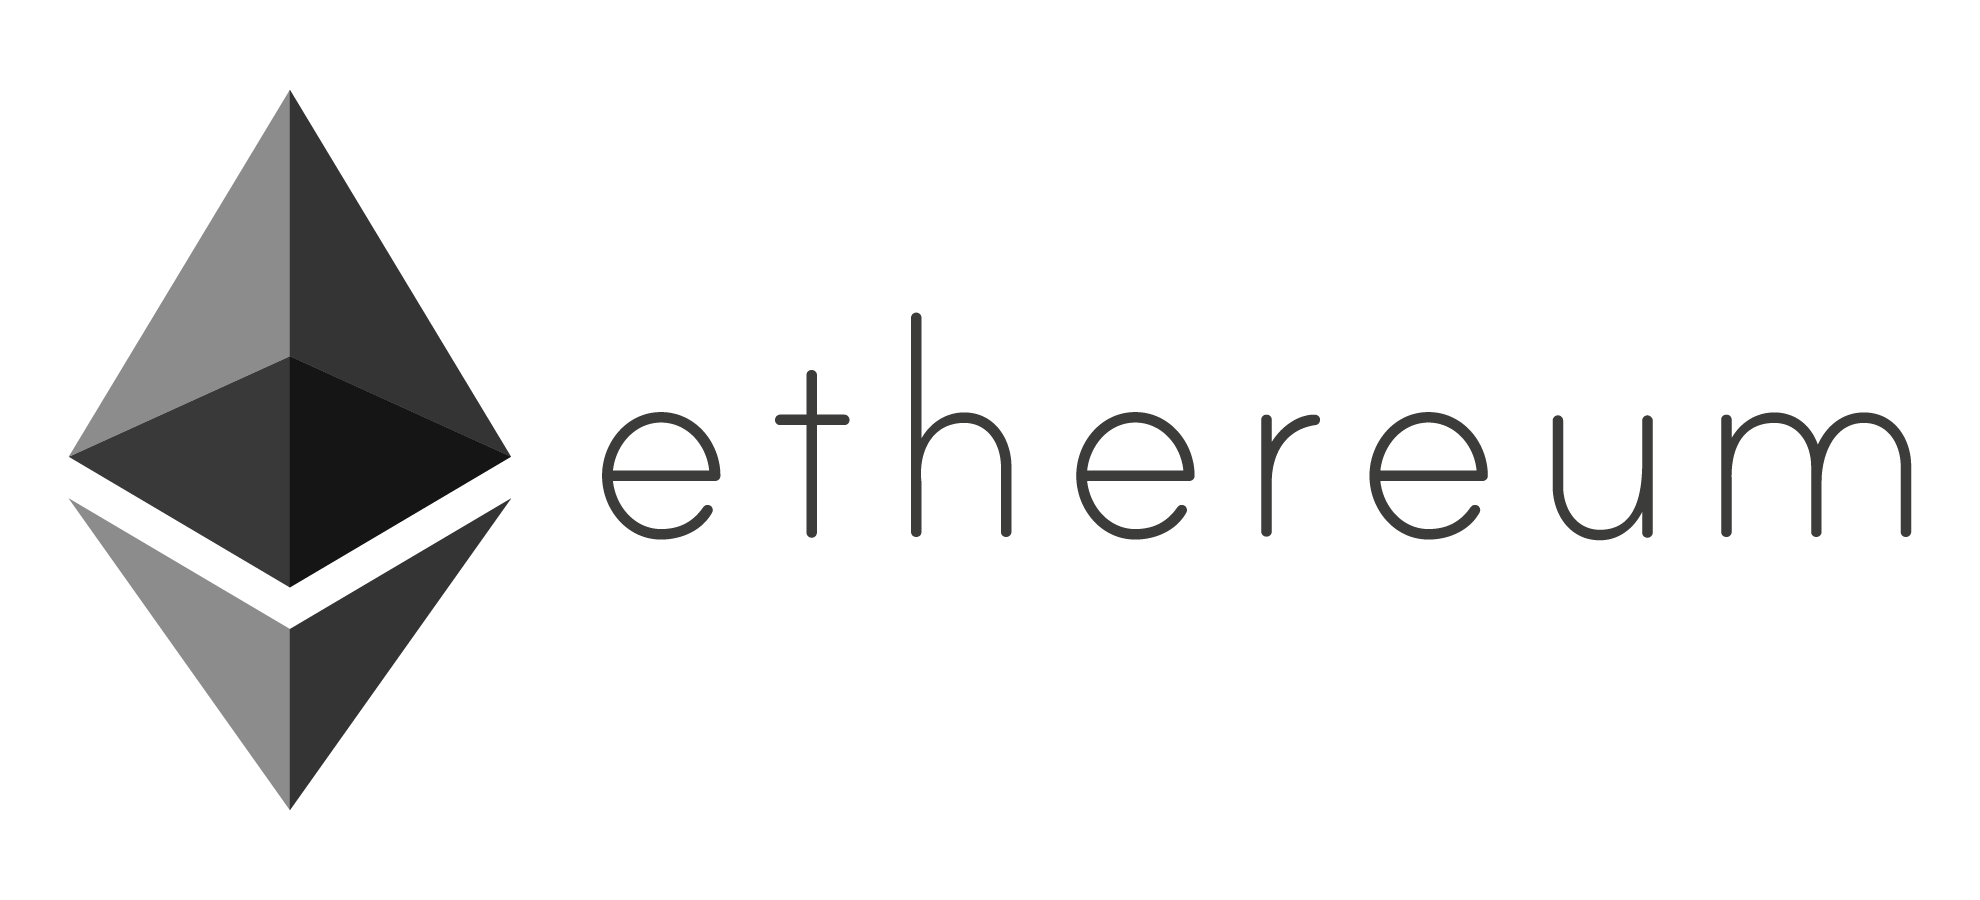 Ethereum Logo - ethereum logo | | Free Vector Icons And Symbols